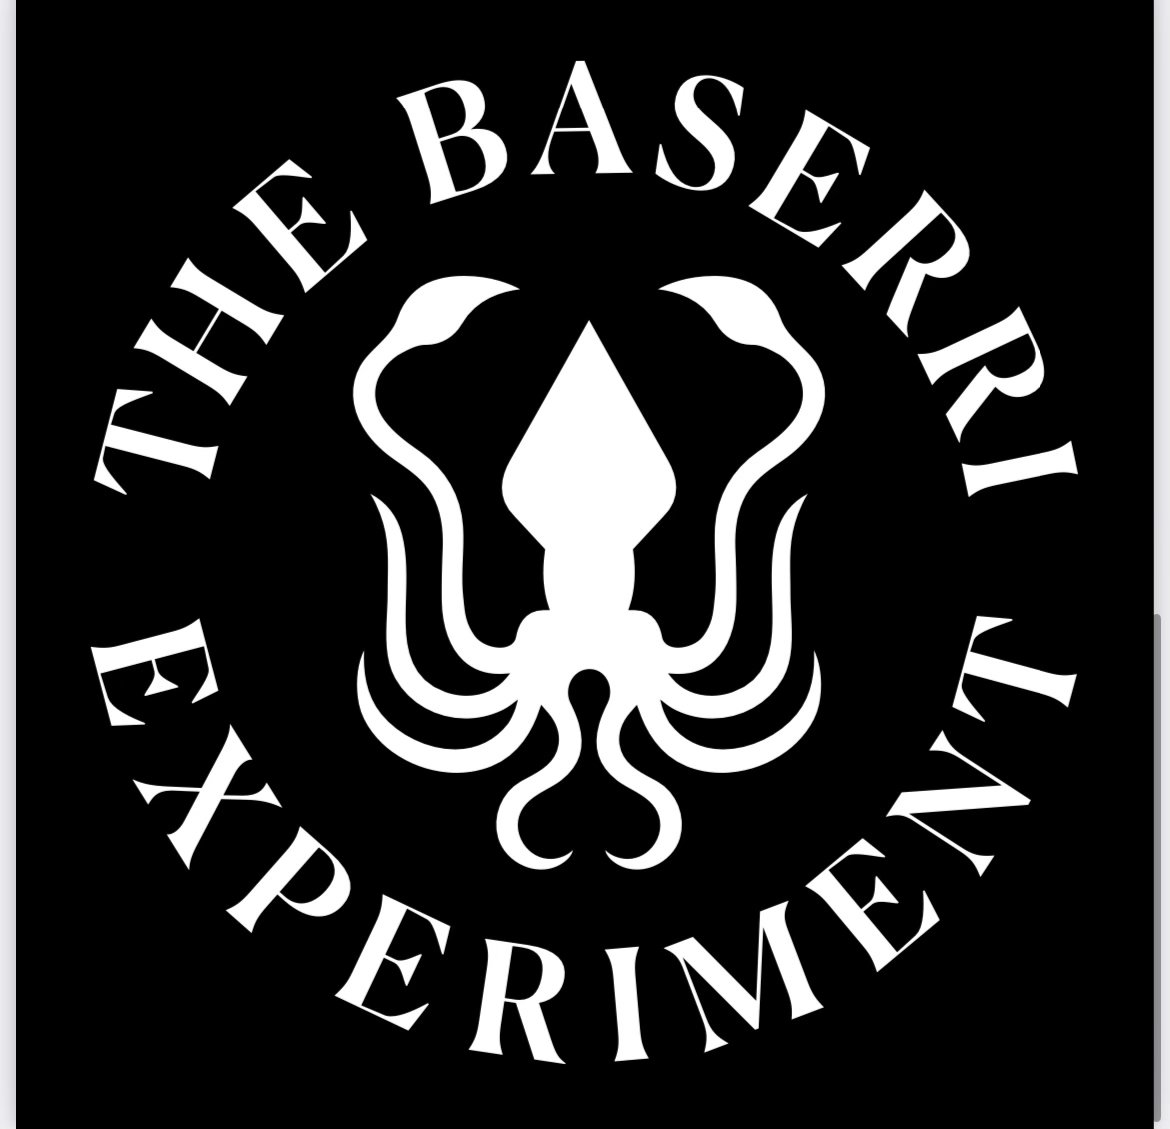 The Baserri Experiment